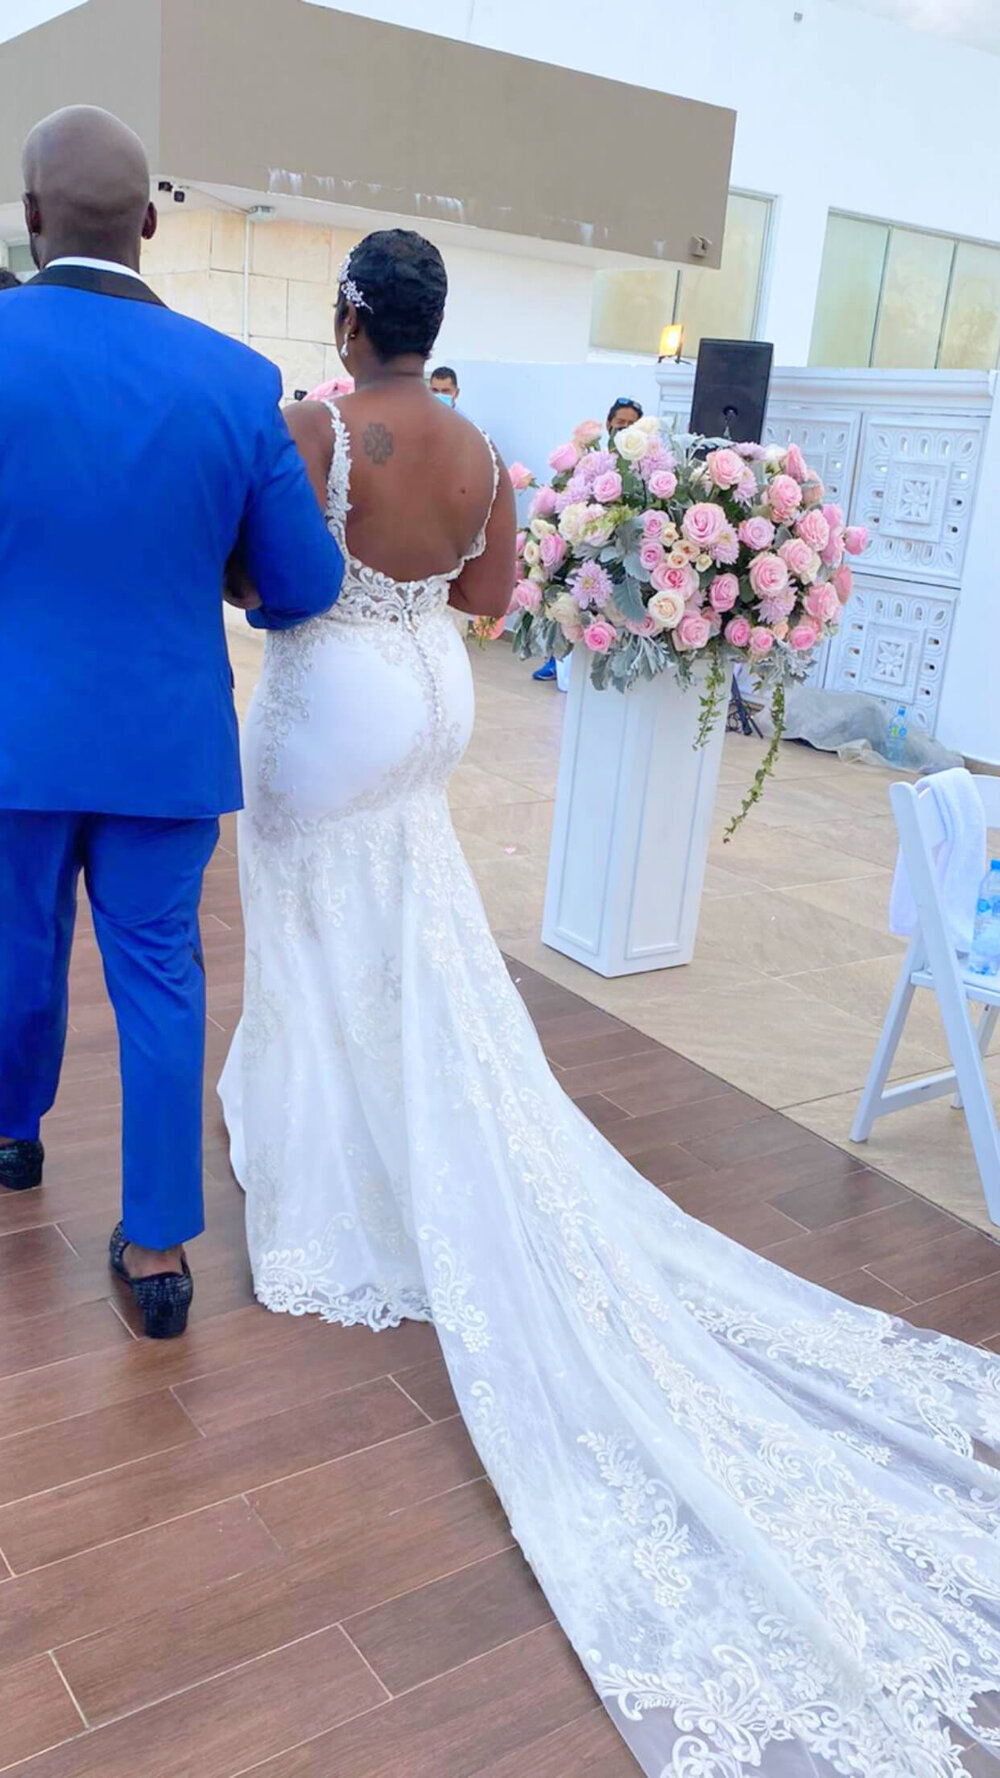 tashima-how-to-plan-a-destination-wedding-in-playa-del-carmen-mexico-azul-fives-beach-resort-black-destination-bride-desti-tv-desti-guide-to-destination-weddings-2020-married-aisle-back.JPG